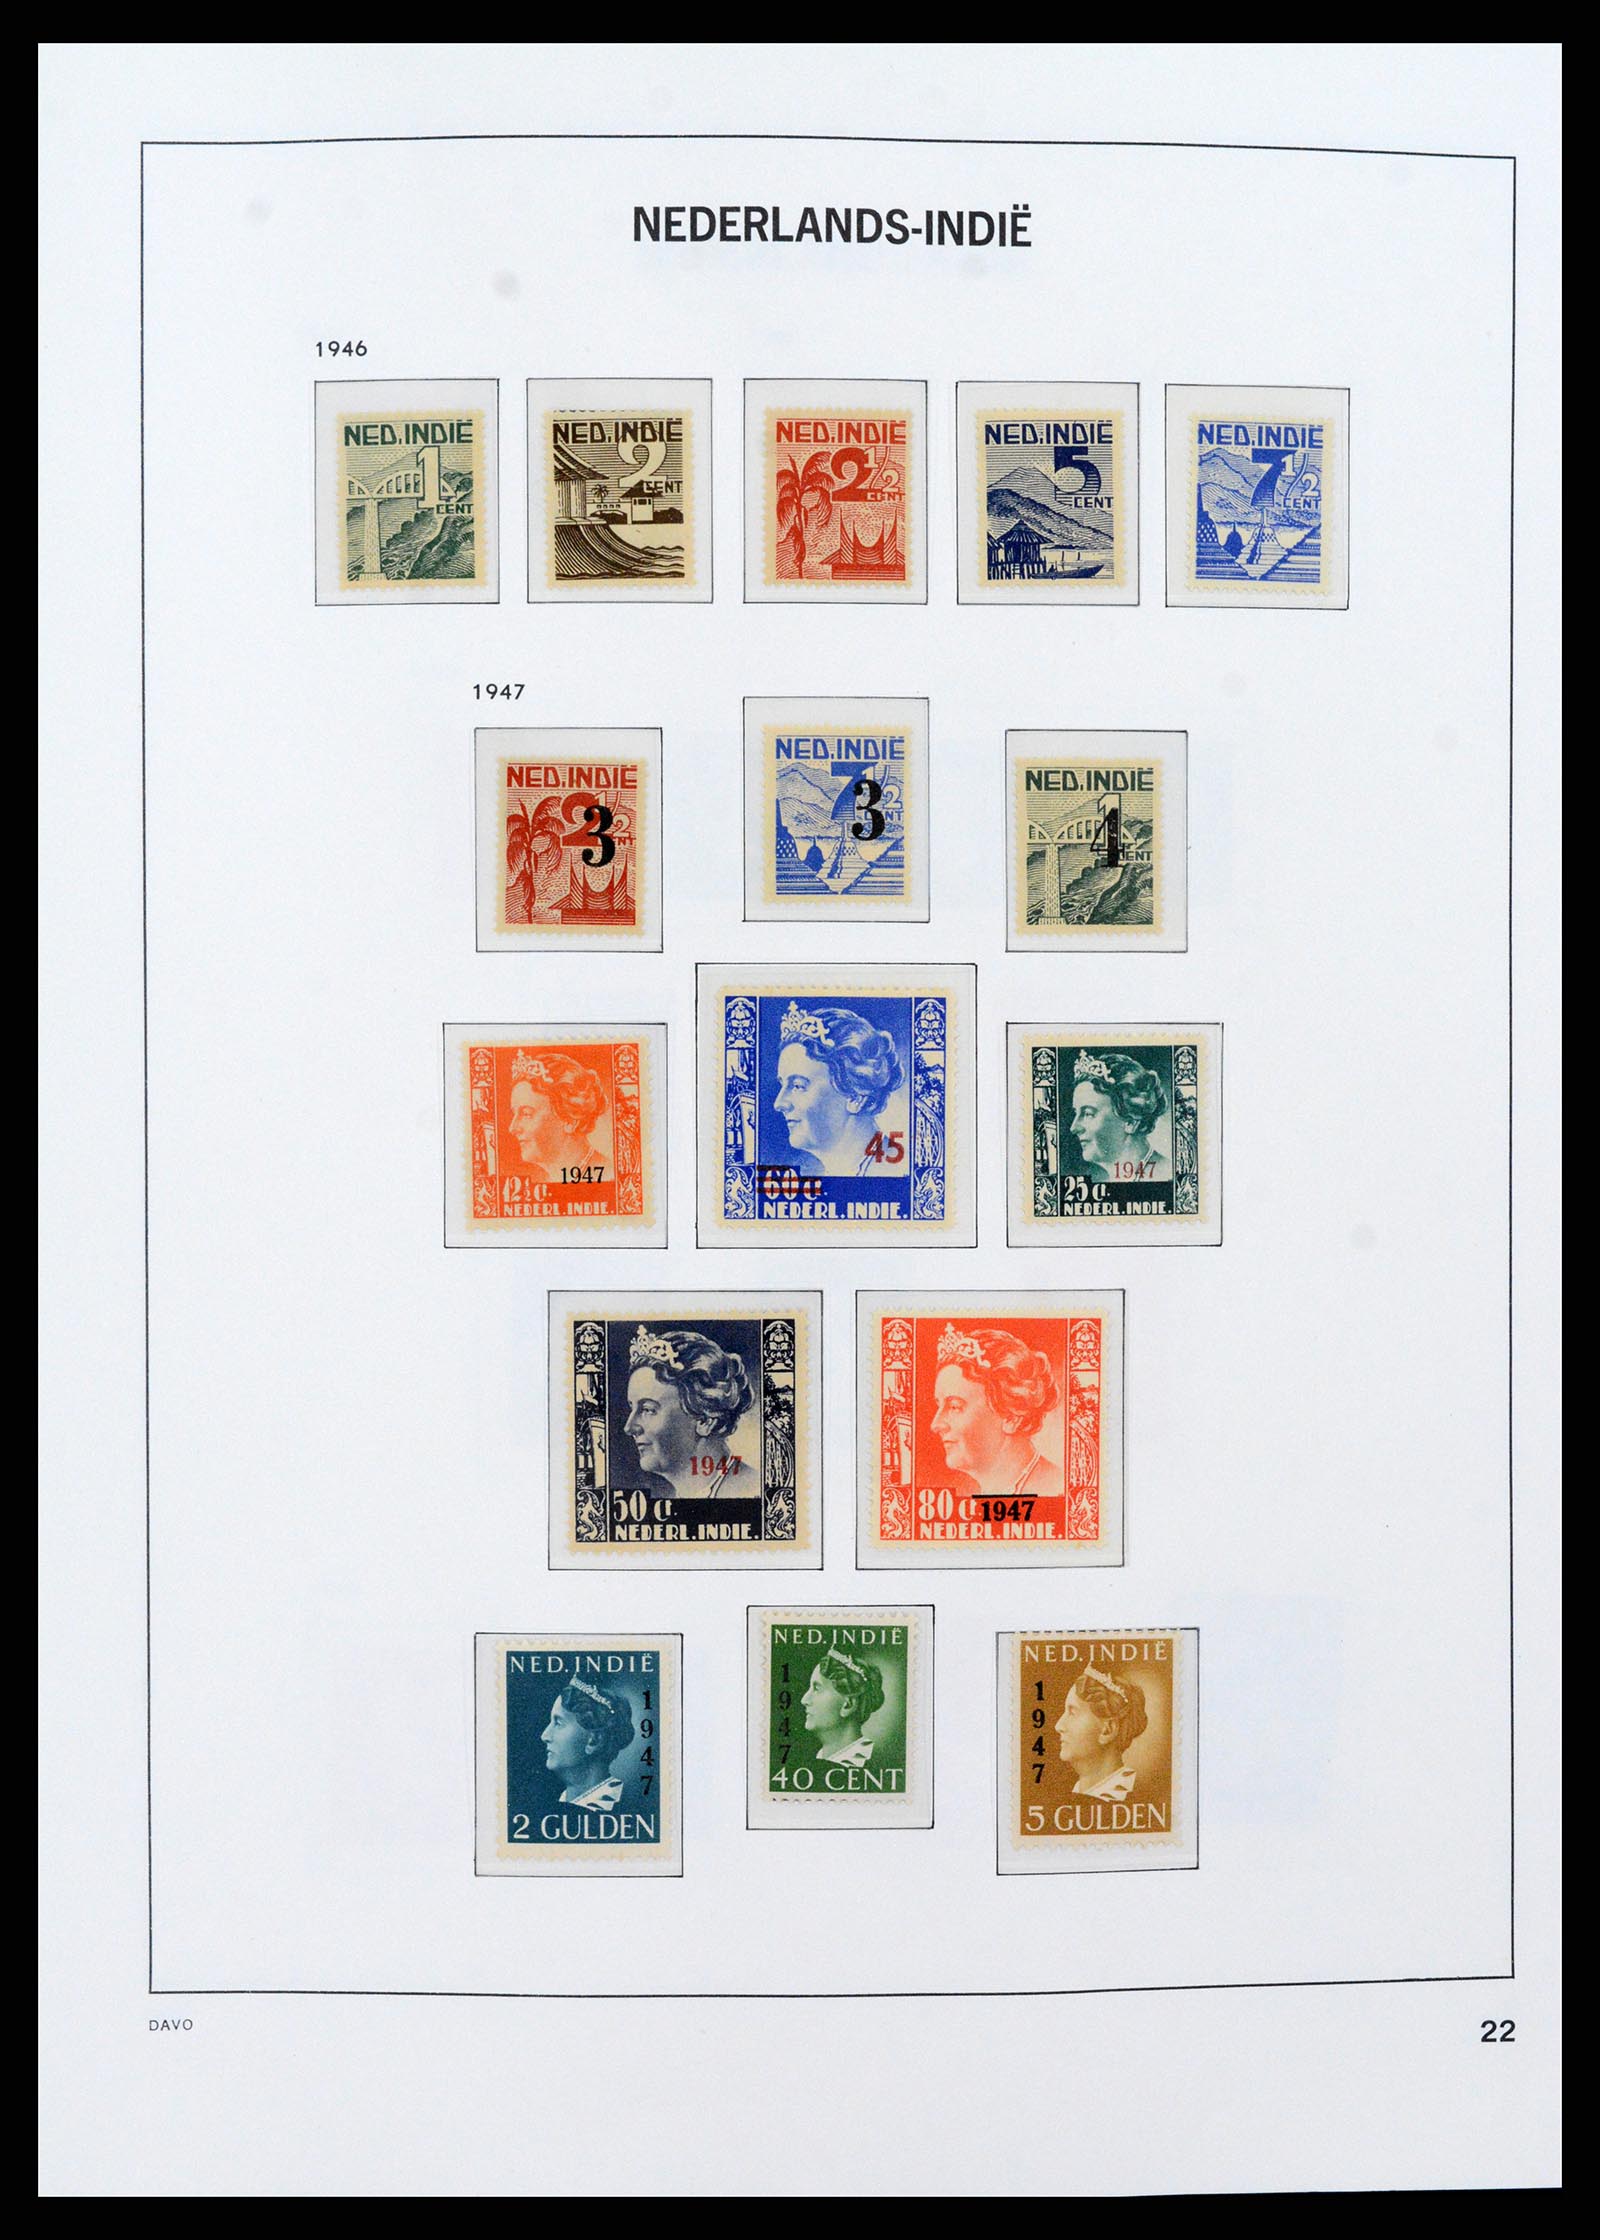 37430 022 - Stamp collection 37430 Dutch Indies 1864-1962.